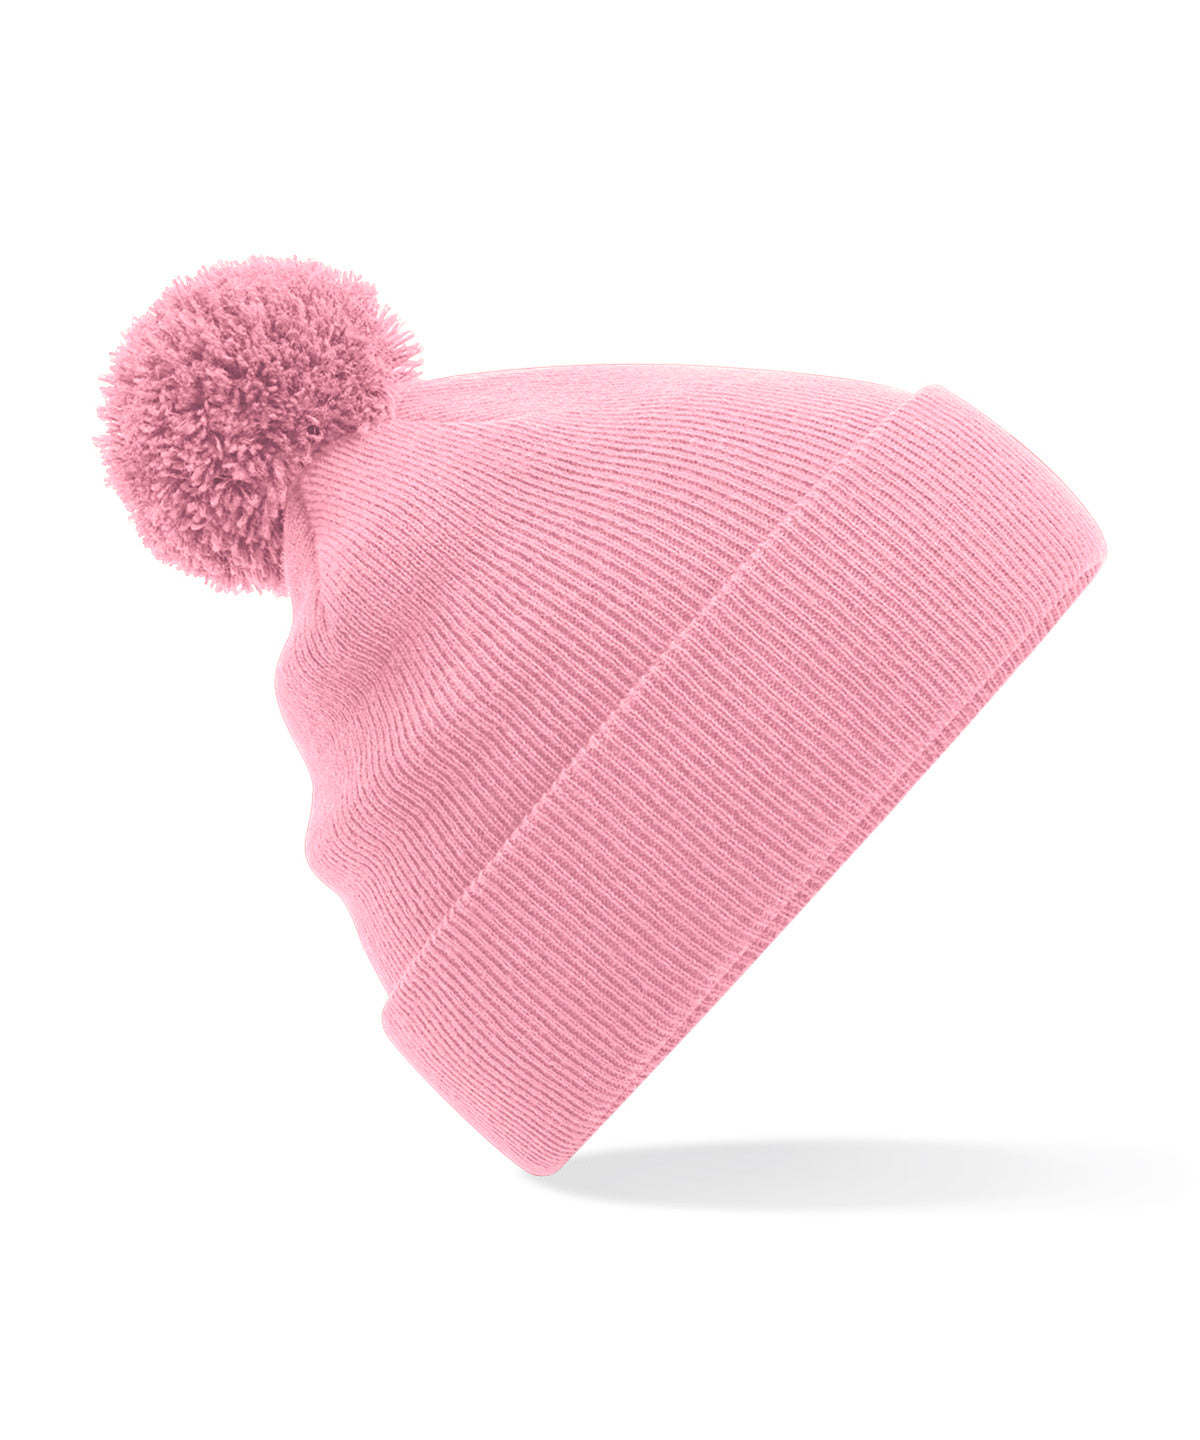 Personalised Hats - Light Pink Beechfield Original pom pom beanie